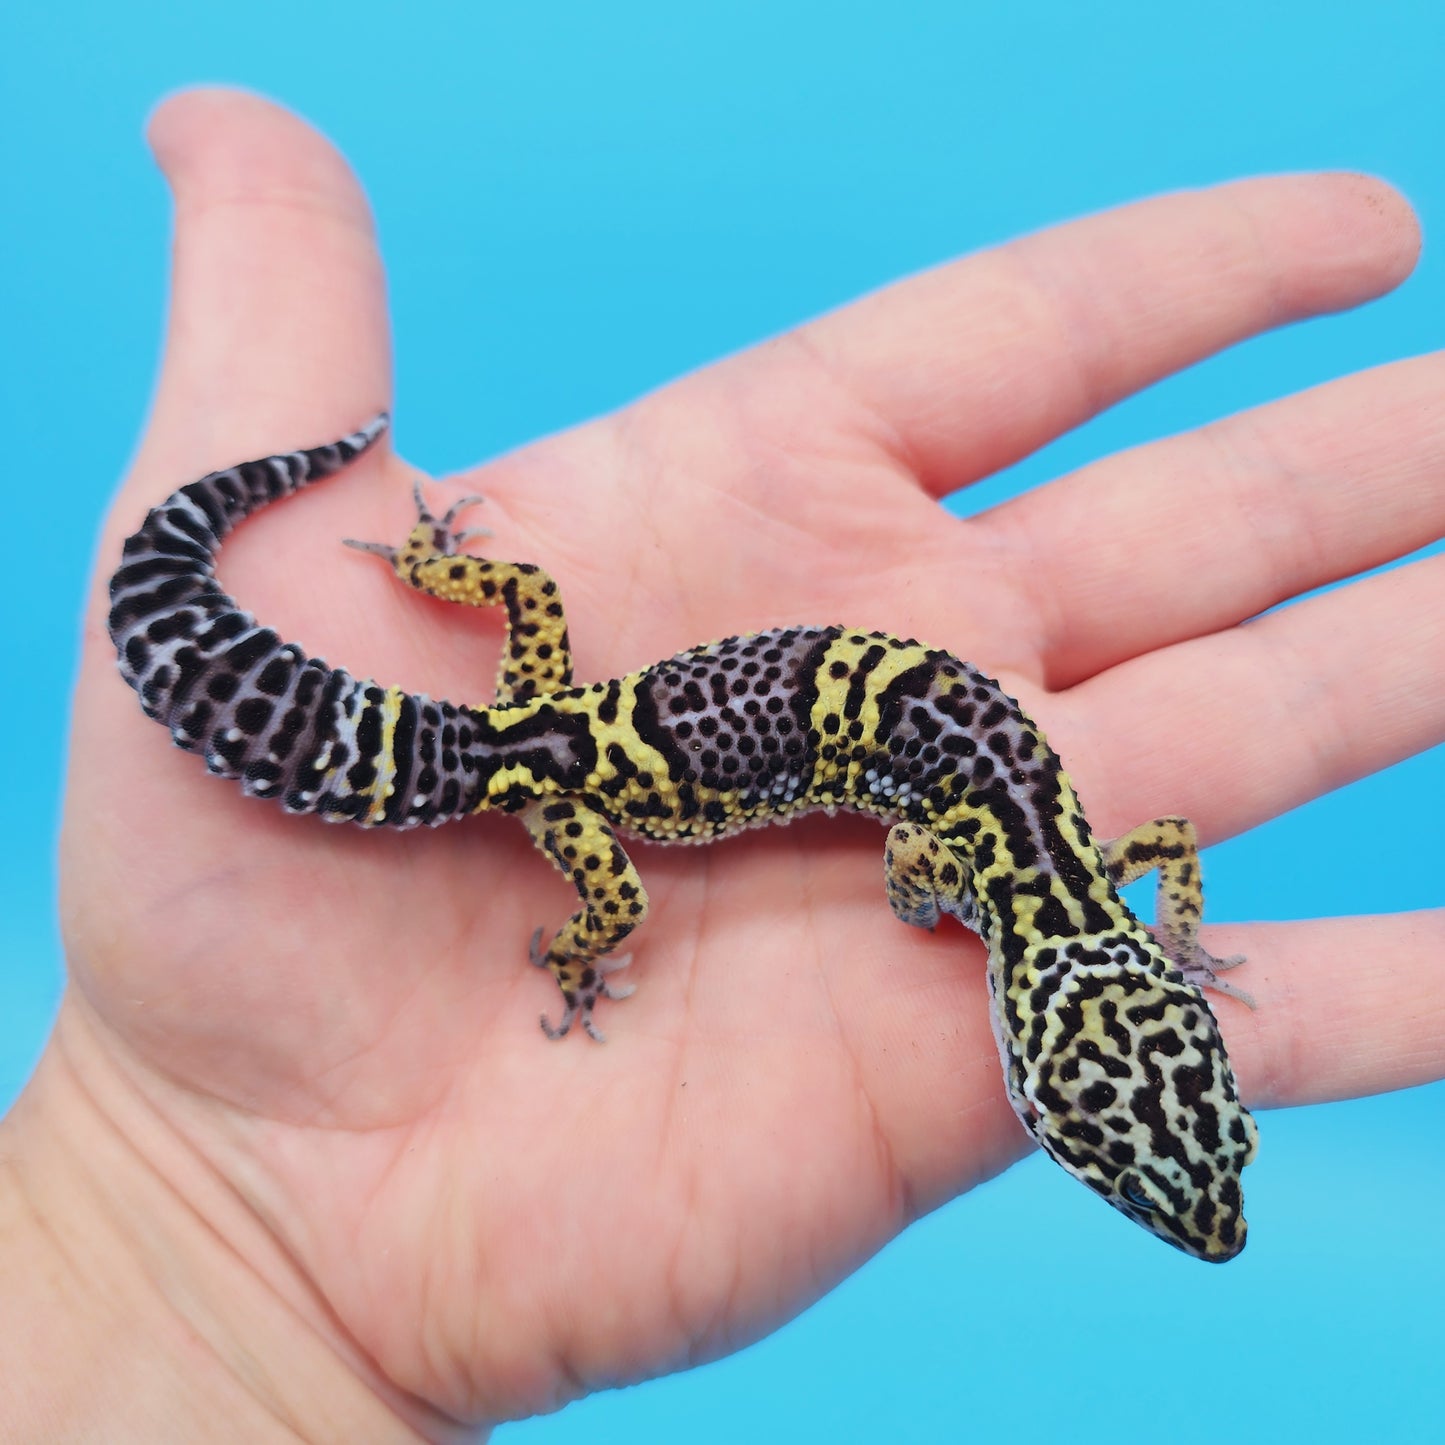 Female Black Night (50%) Afghanicus (25%) Turcmenicus (25%) Leopard Gecko